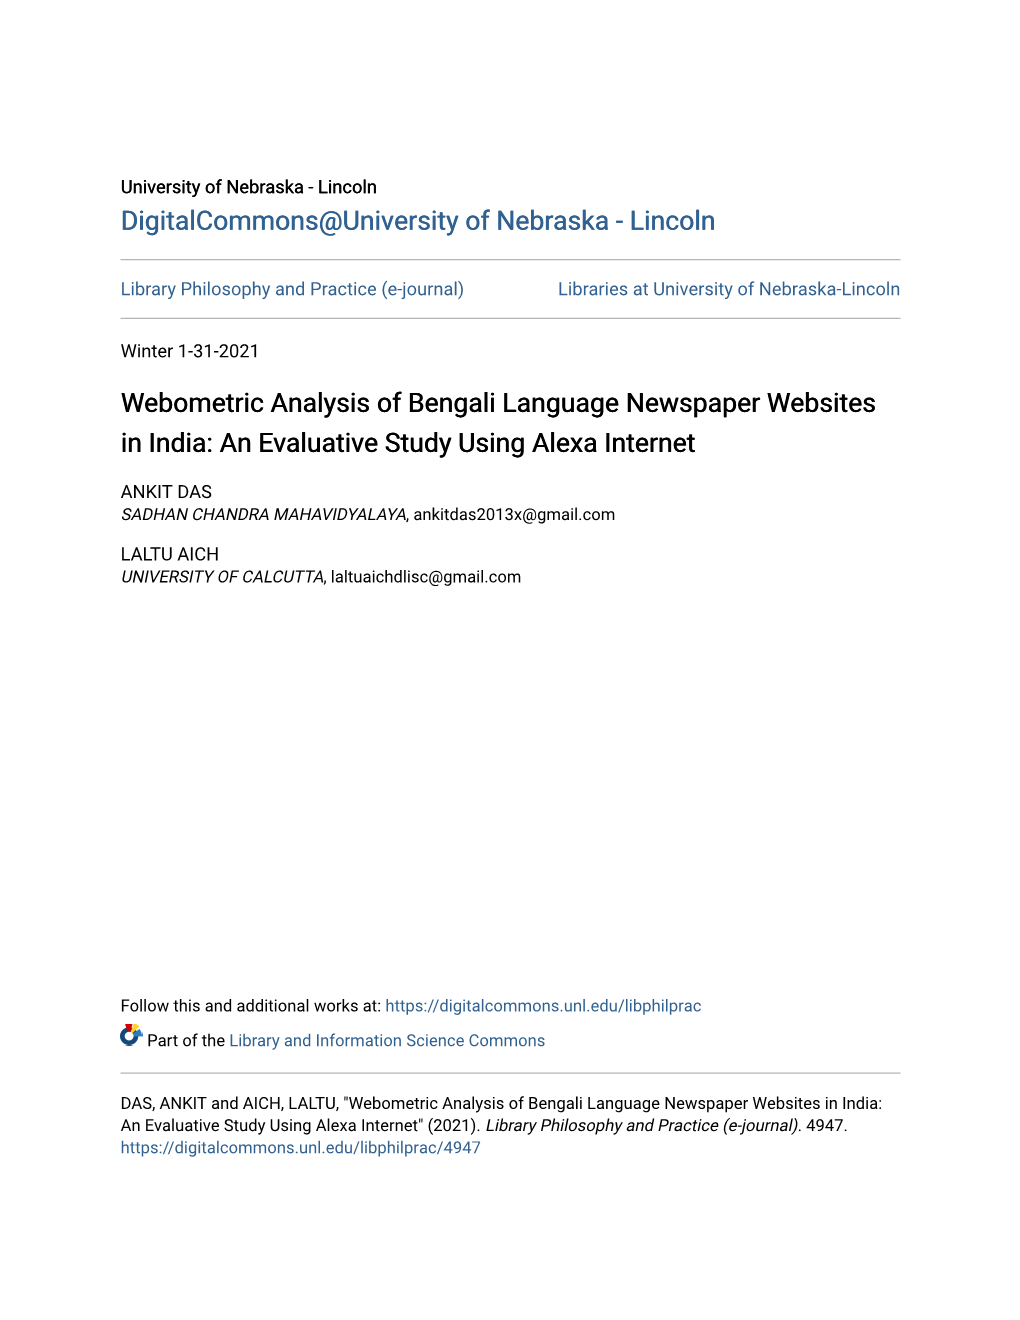 Webometric Analysis of Bengali Language Newspaper Websites in India: an Evaluative Study Using Alexa Internet